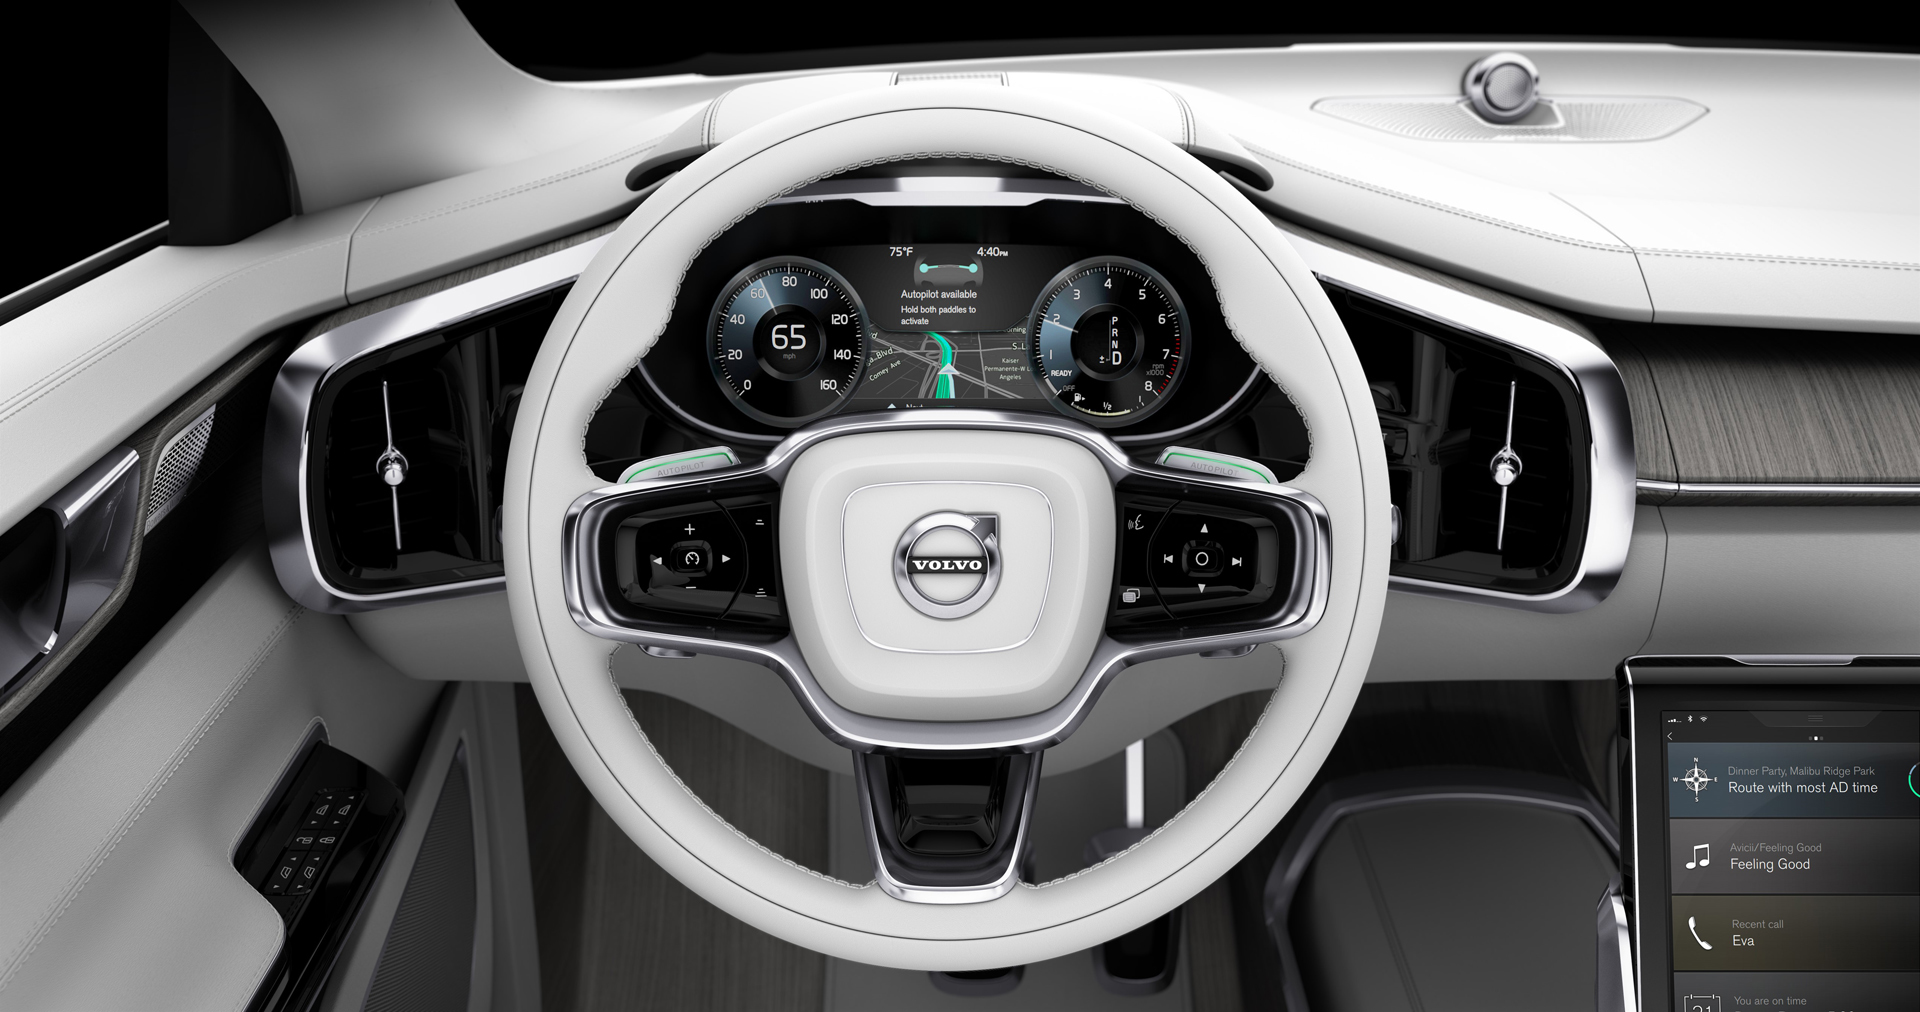 Volvo Concept 26 (2015): Autonomous Future